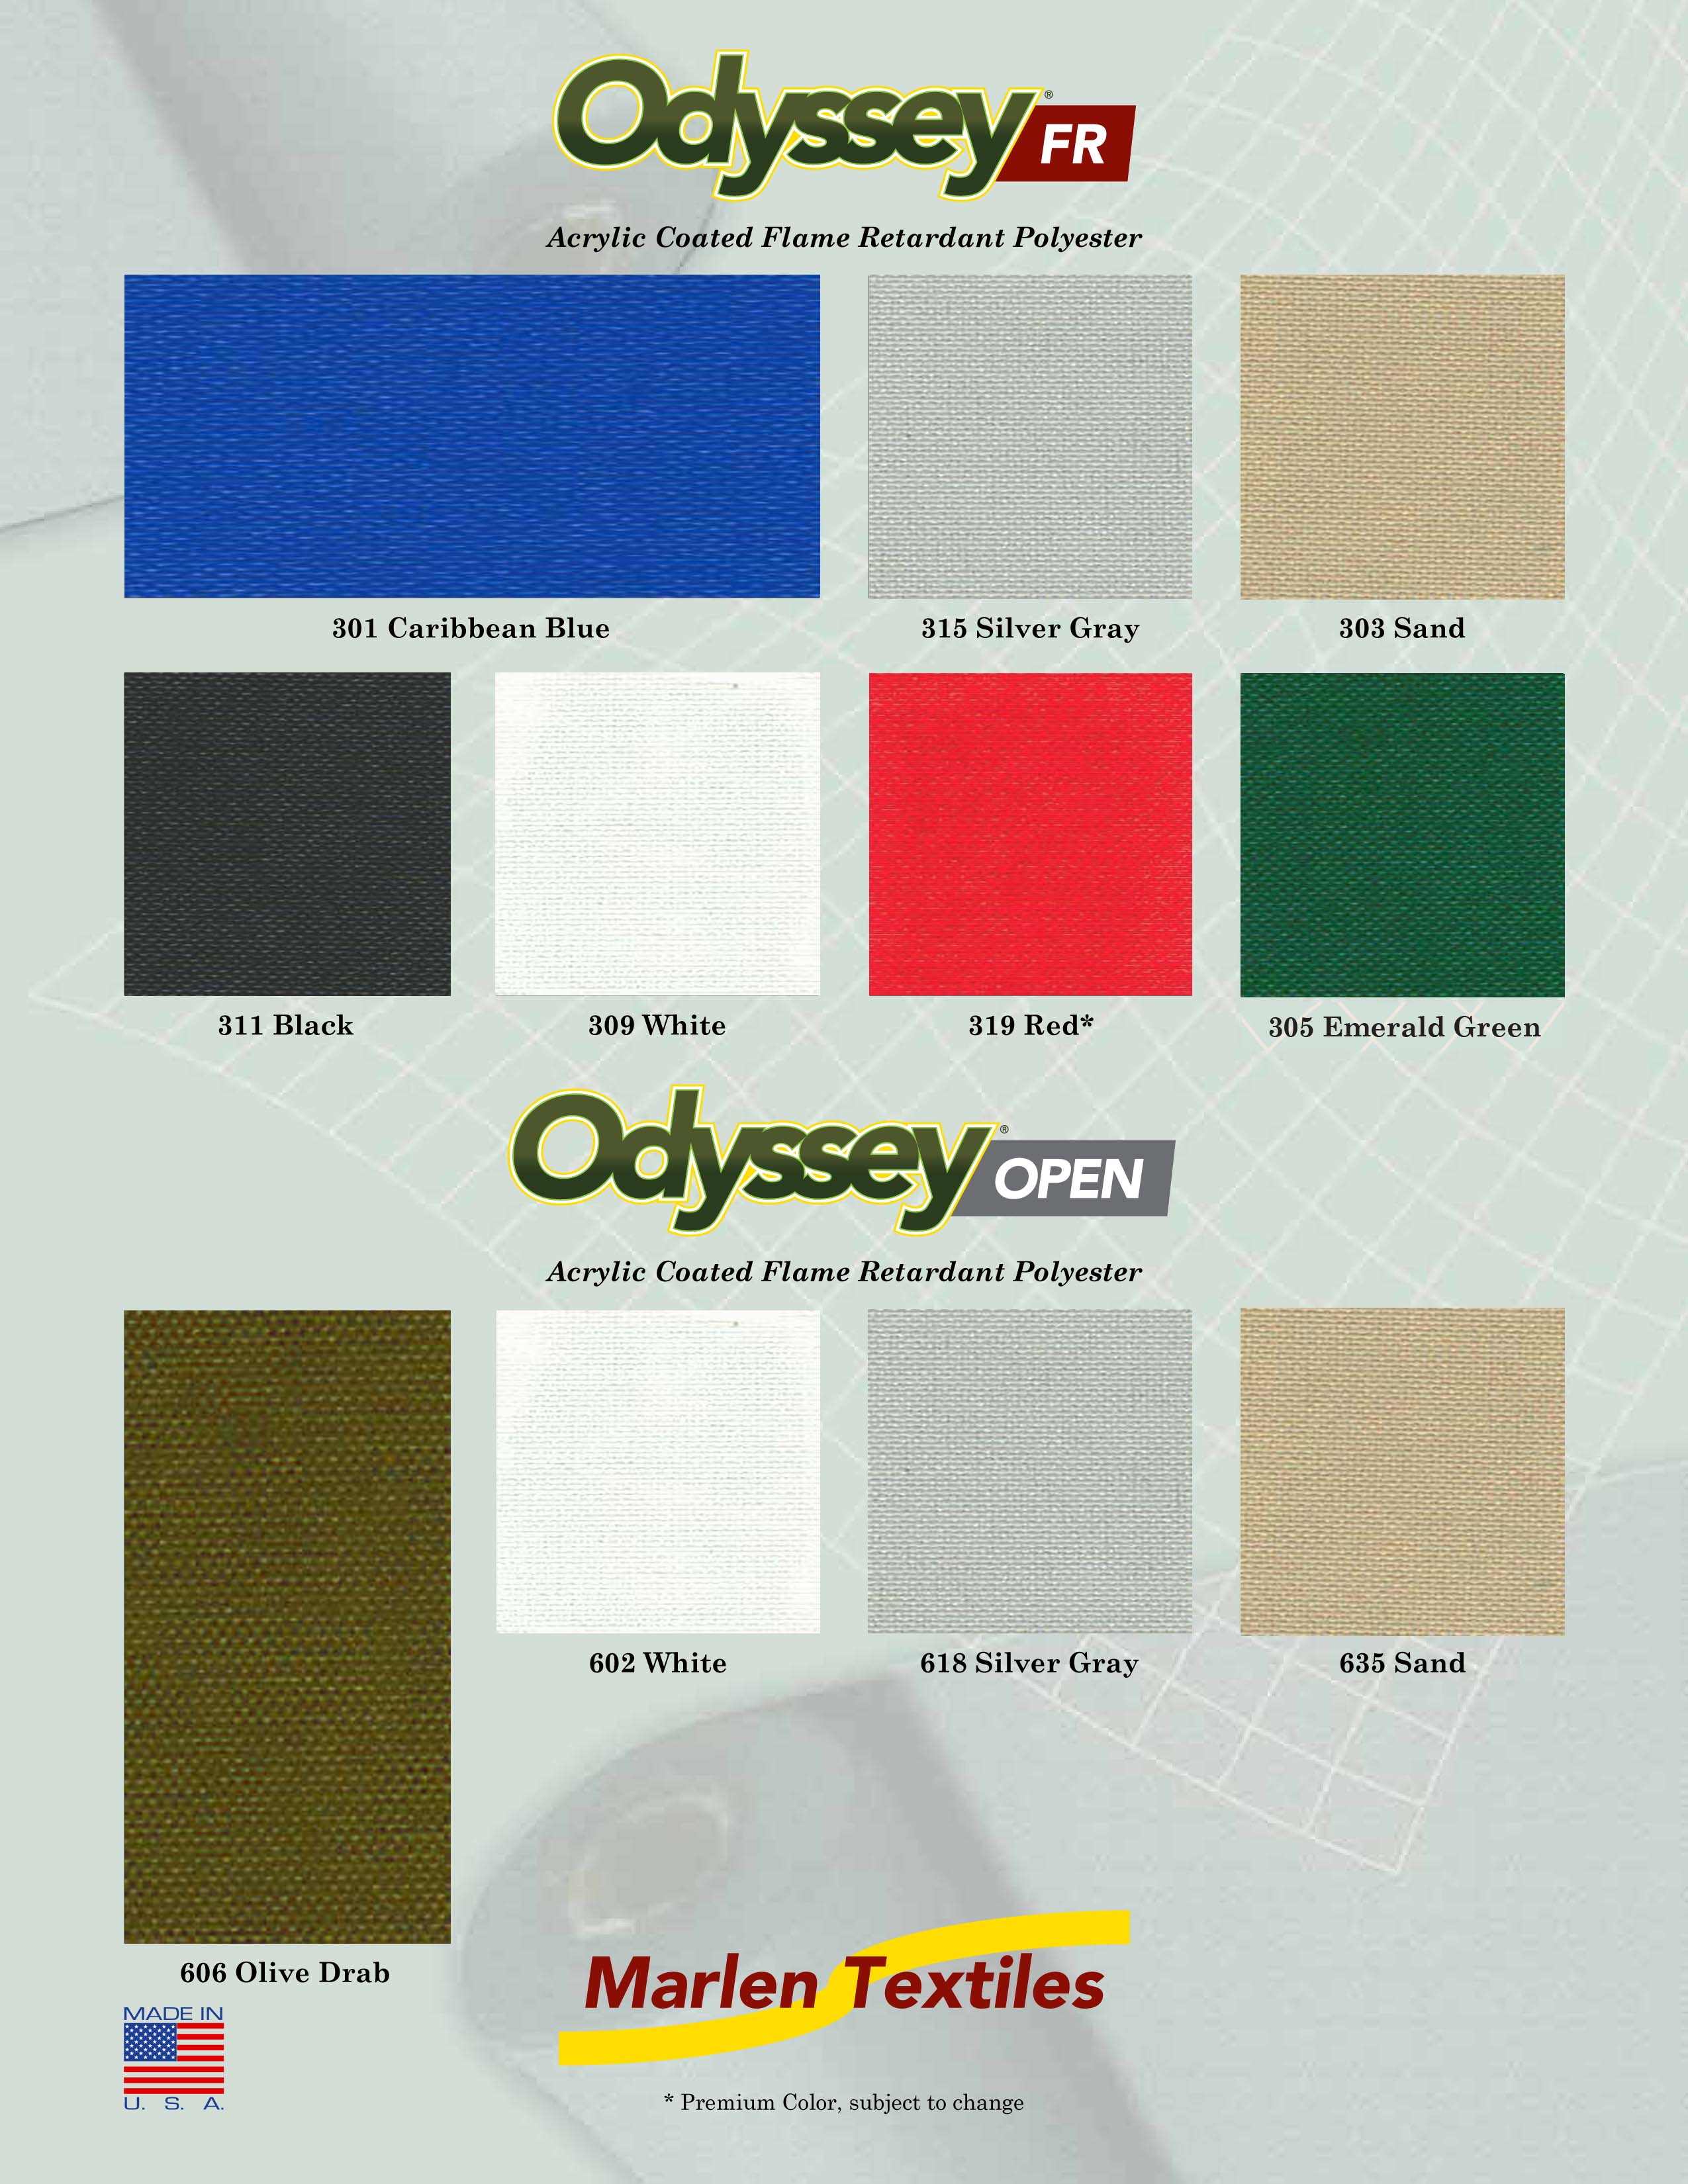 Marlen Textiles | Odyssey FR Colors